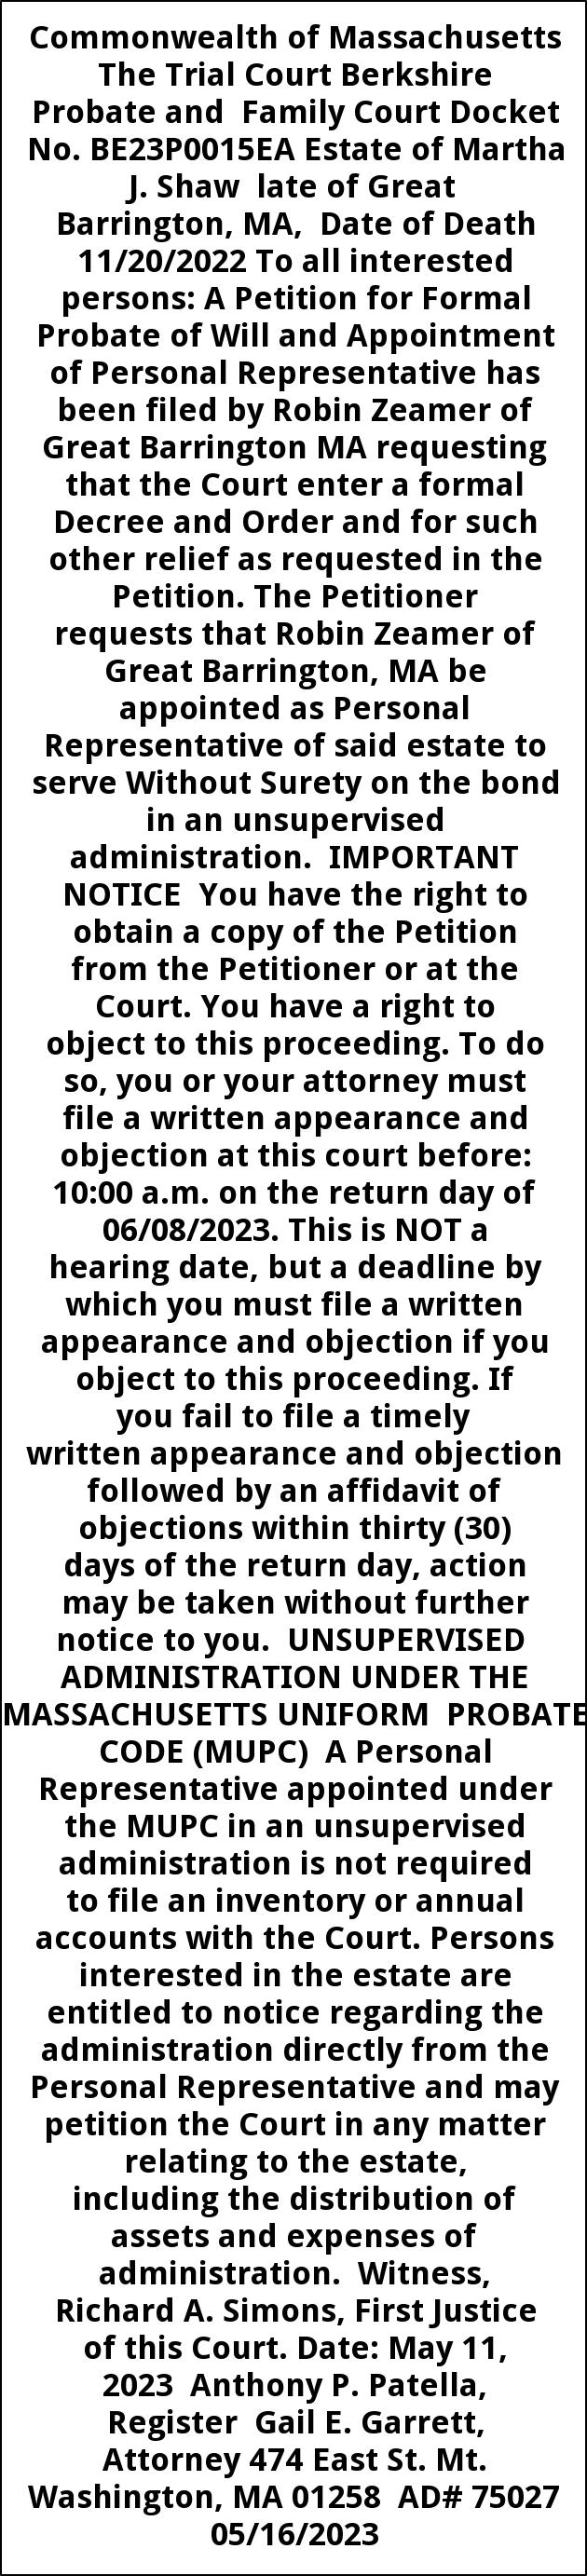 Informal Probate Publication Notice